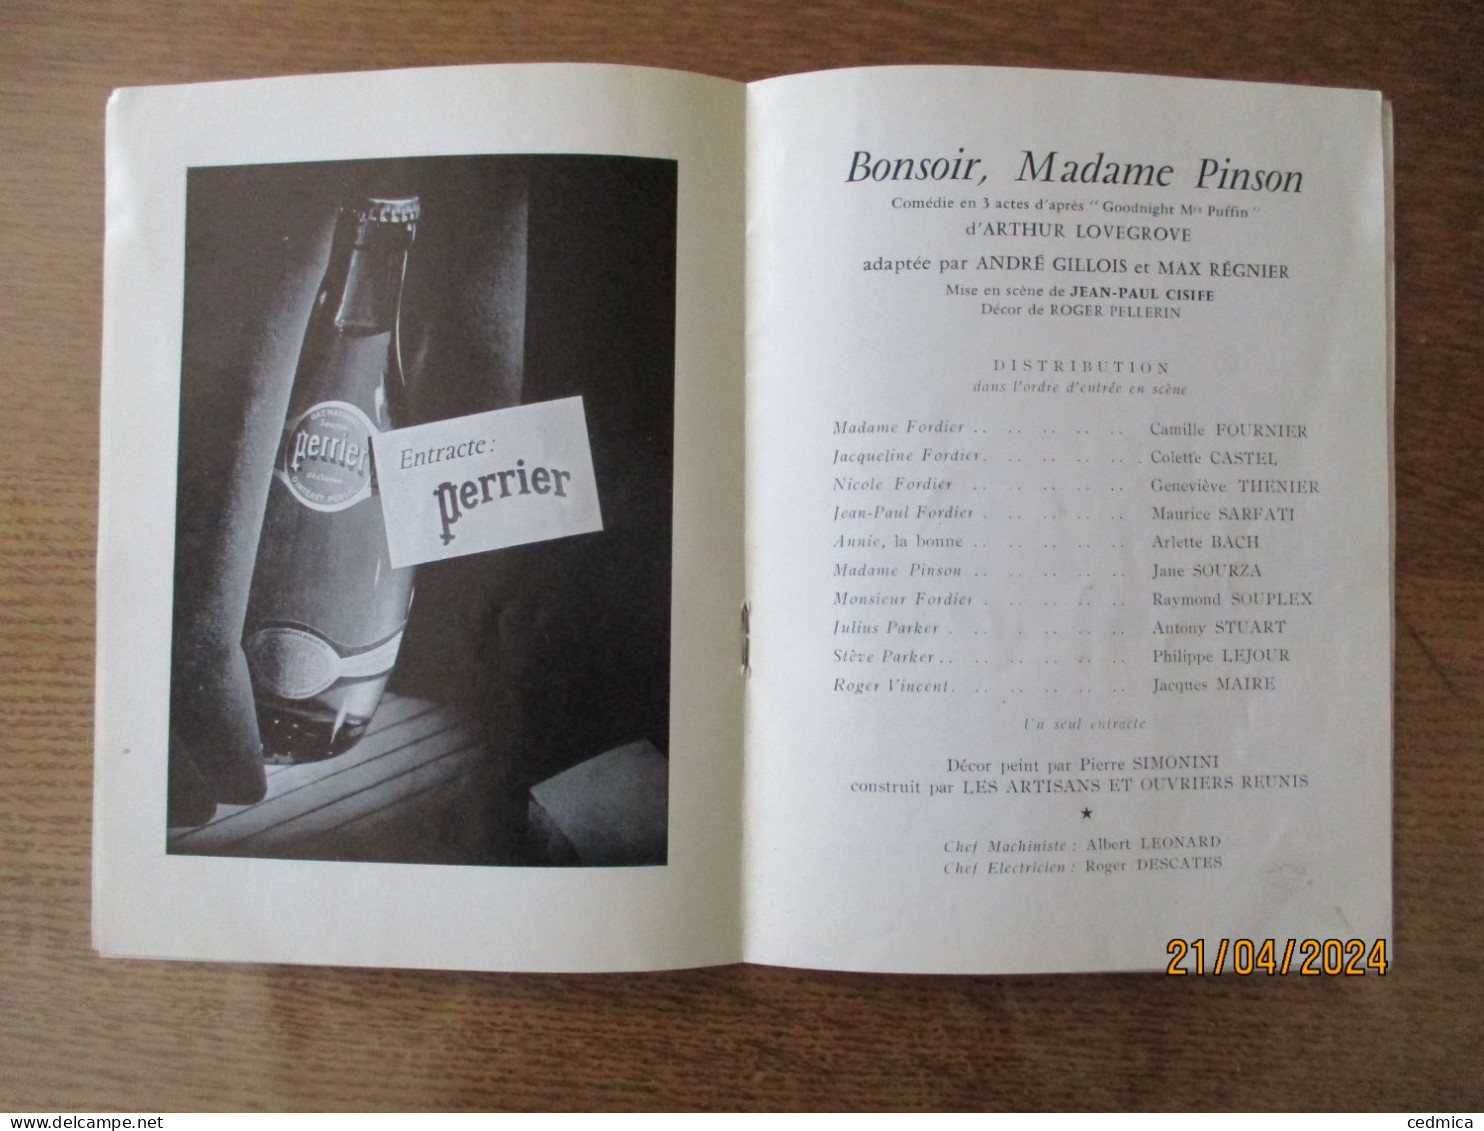 THEATRE DE LA PORTE St MARTIN SAISON 1963-1964 BONSOIR,MADAME PINSON - Programs